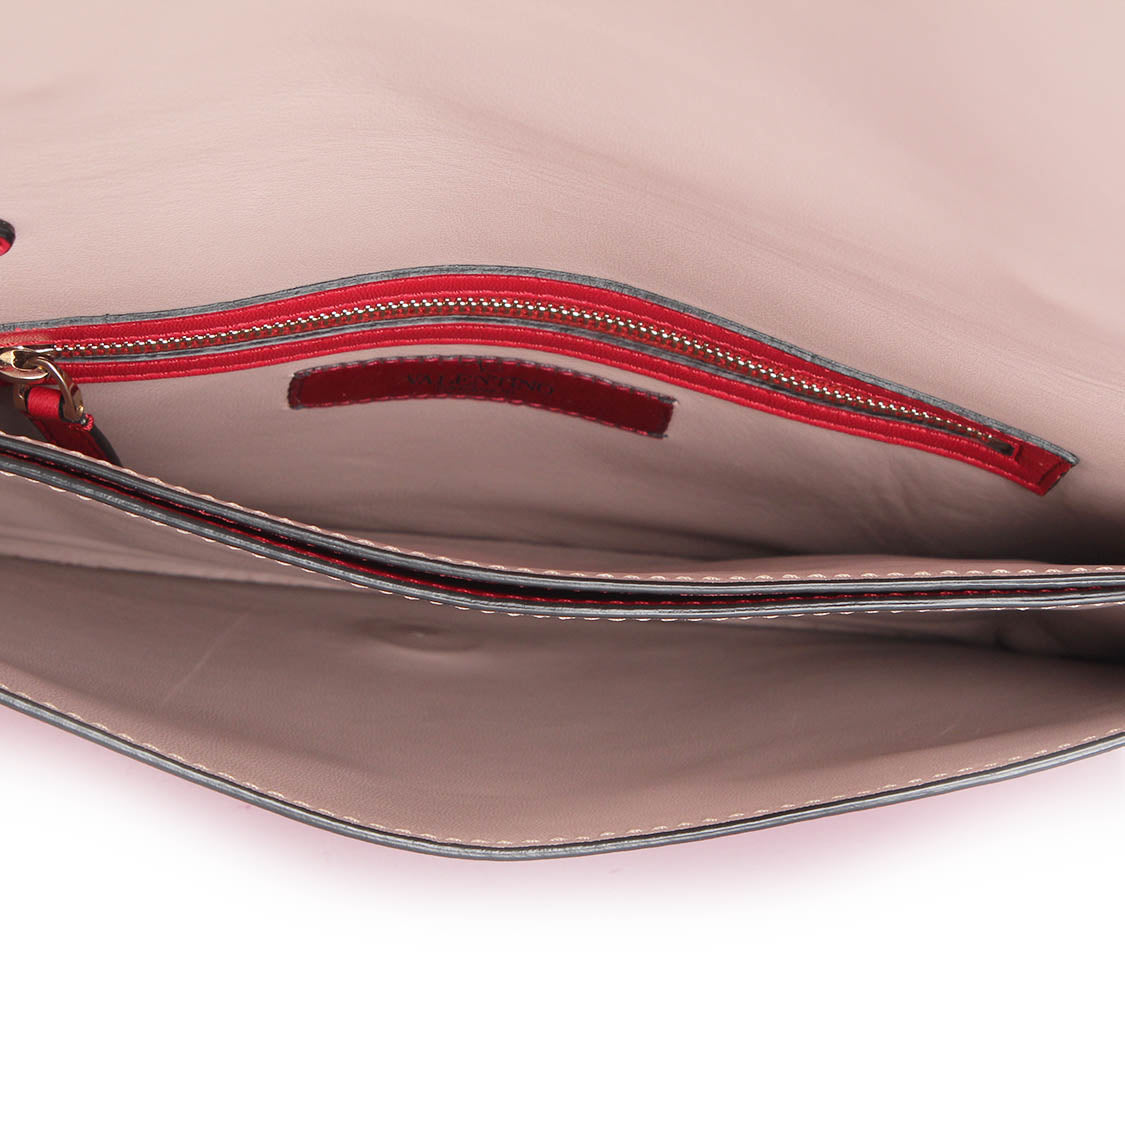 Rockstud Leather Wristlet Clutch Bag